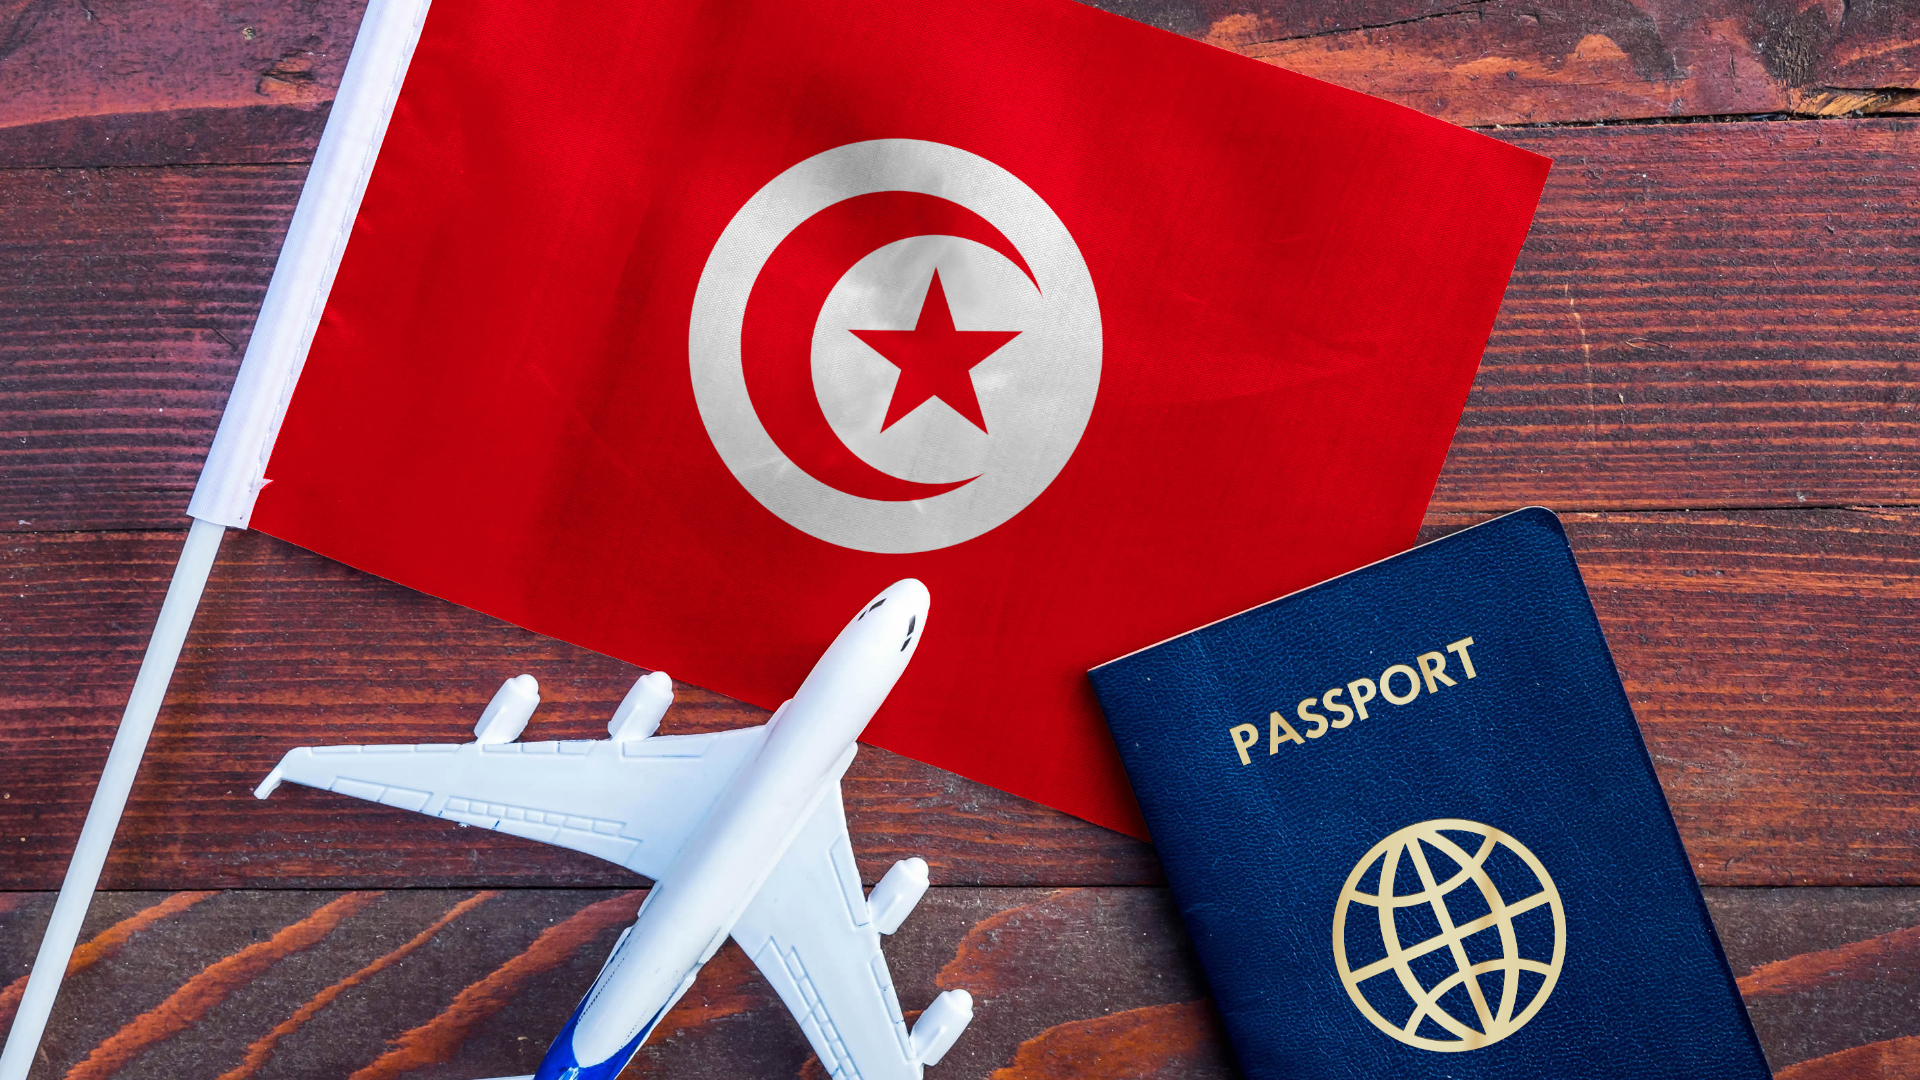 Tunisia: medical tourism destination